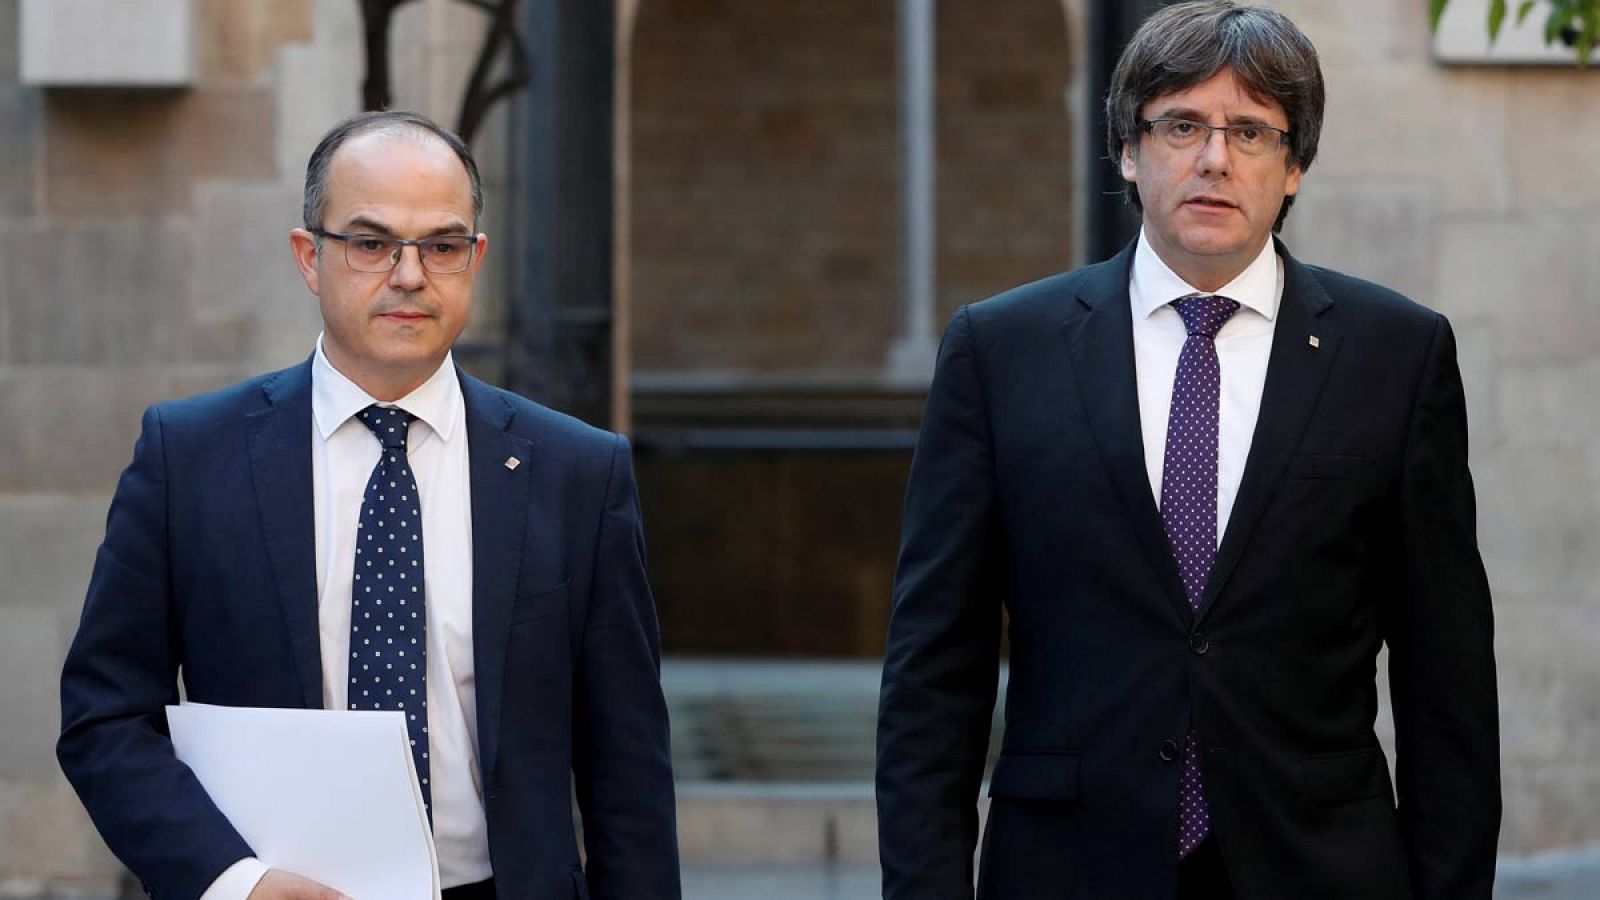 El exconseller de Presidencia, Jordi Turull, acompañado del expresident, Puigdemont.